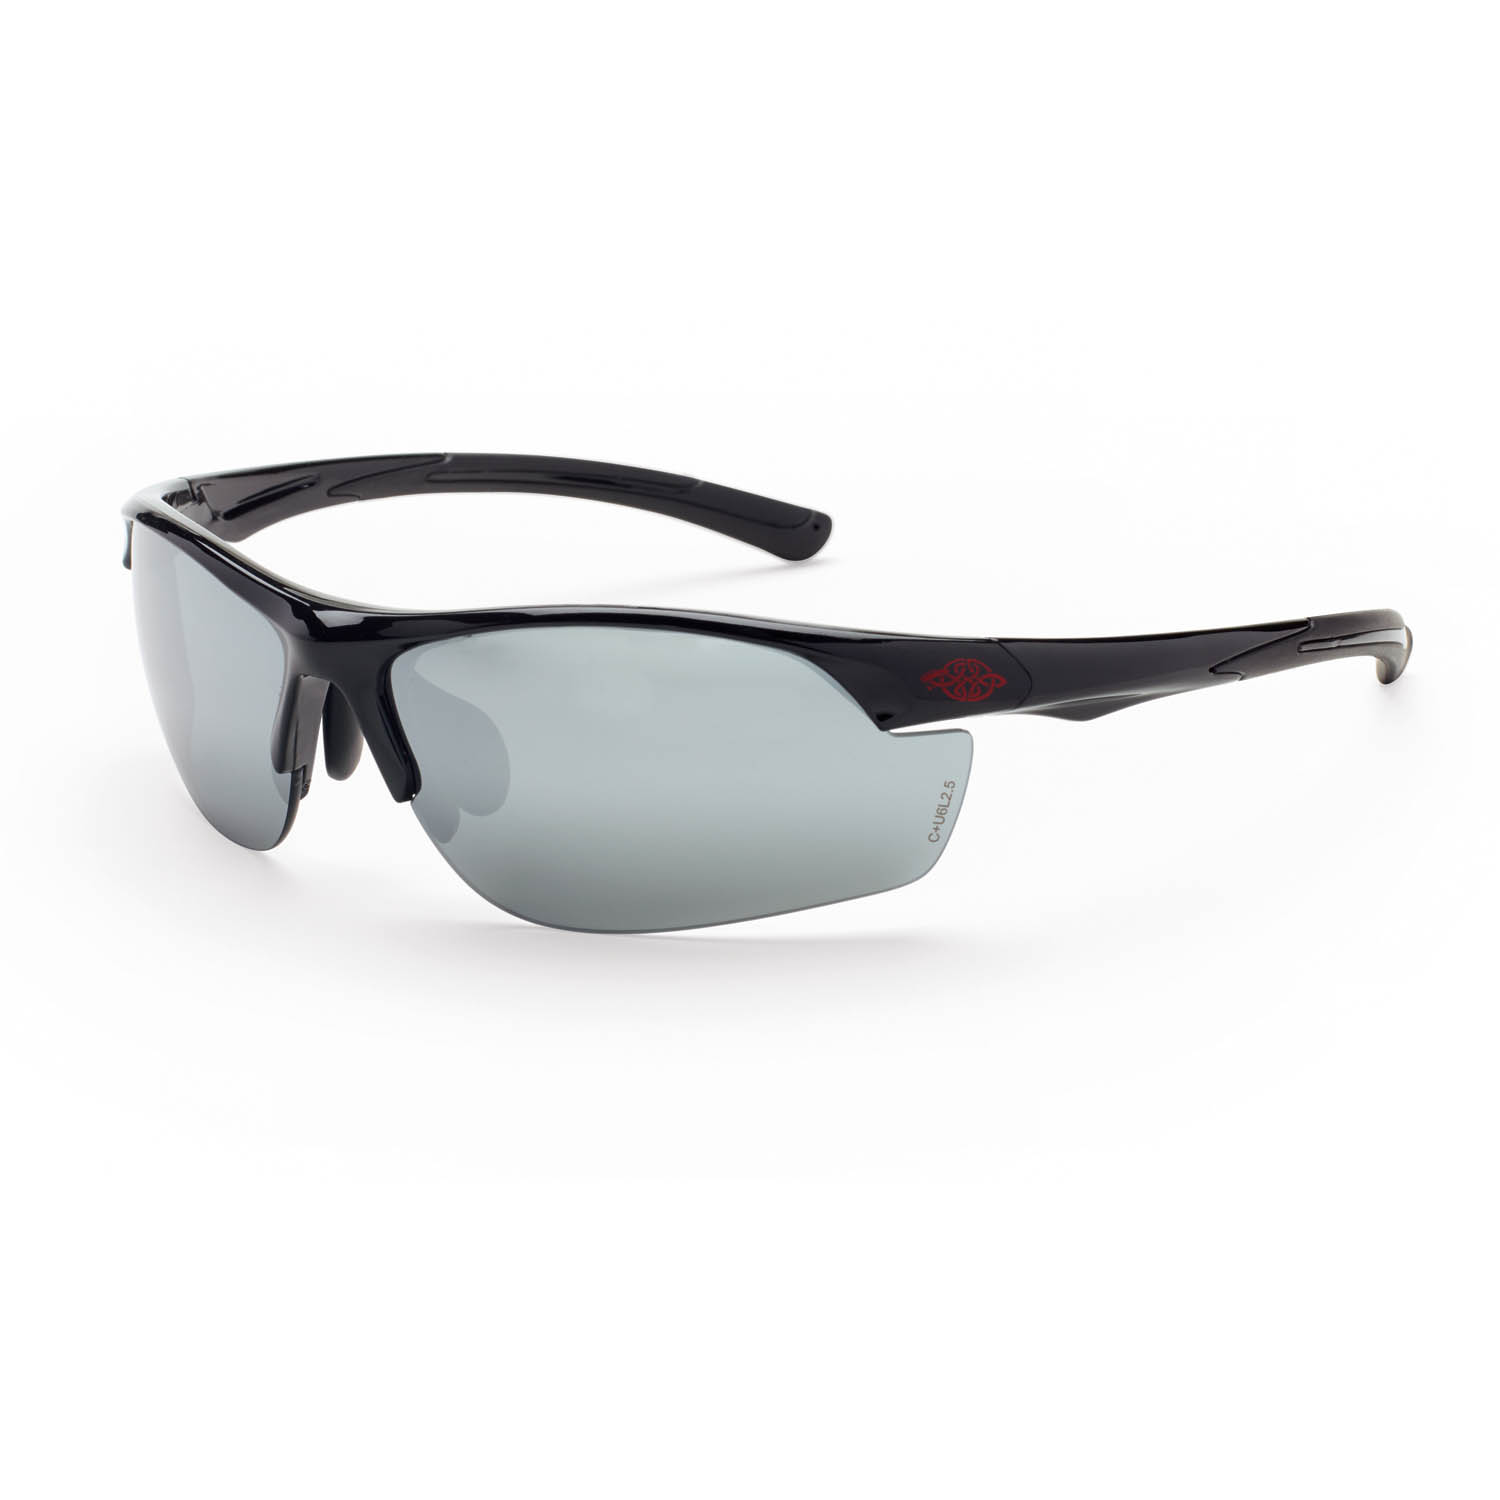 AR3 Premium Safety Eyewear - Shiny Black Frame - Silver Mirror Lens